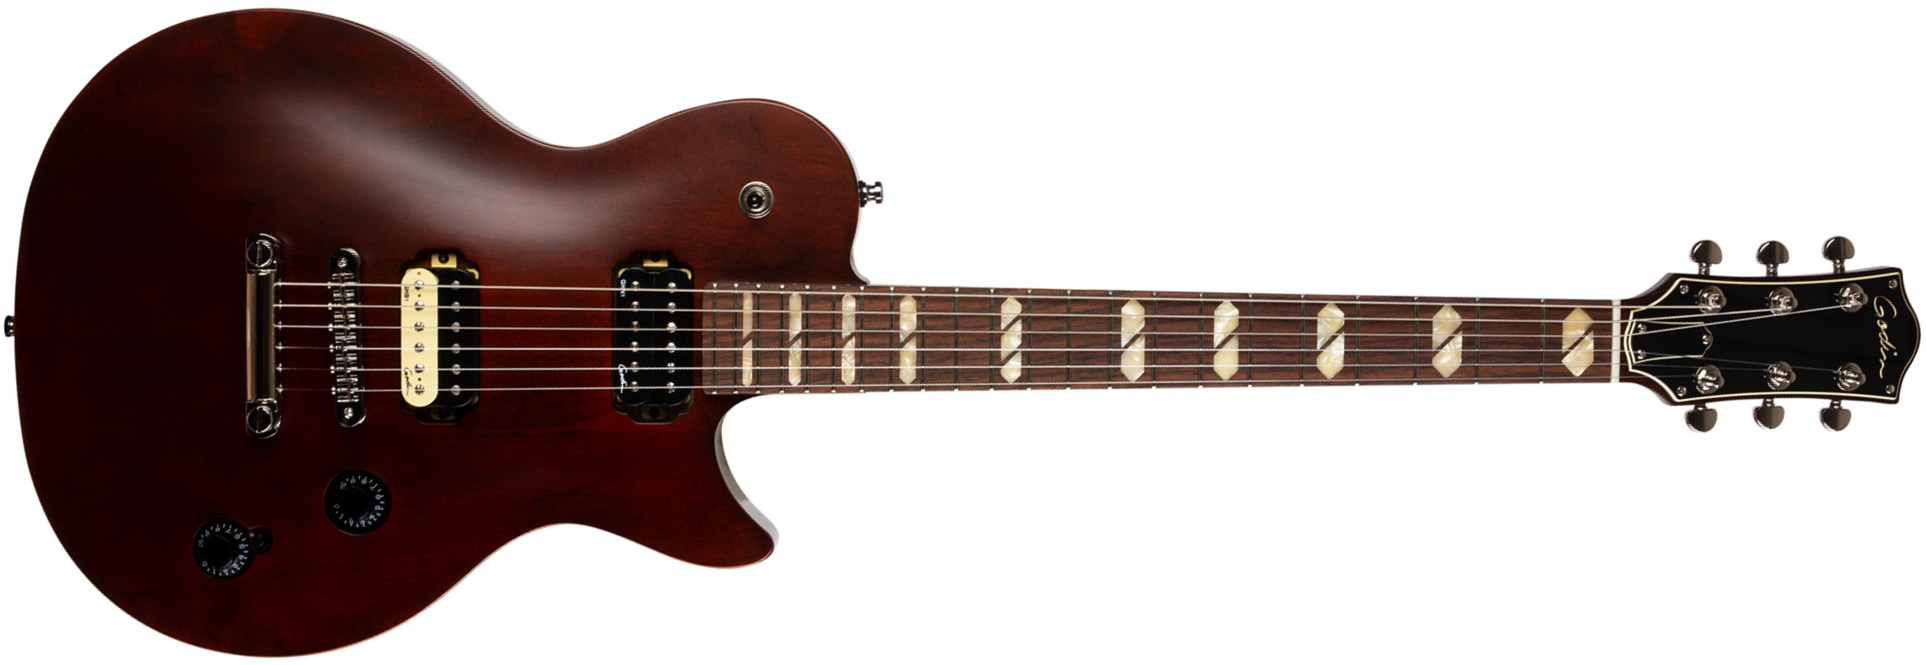 Godin Summit Classic Hh Ht Rw - Havana Brown - Enkel gesneden elektrische gitaar - Main picture